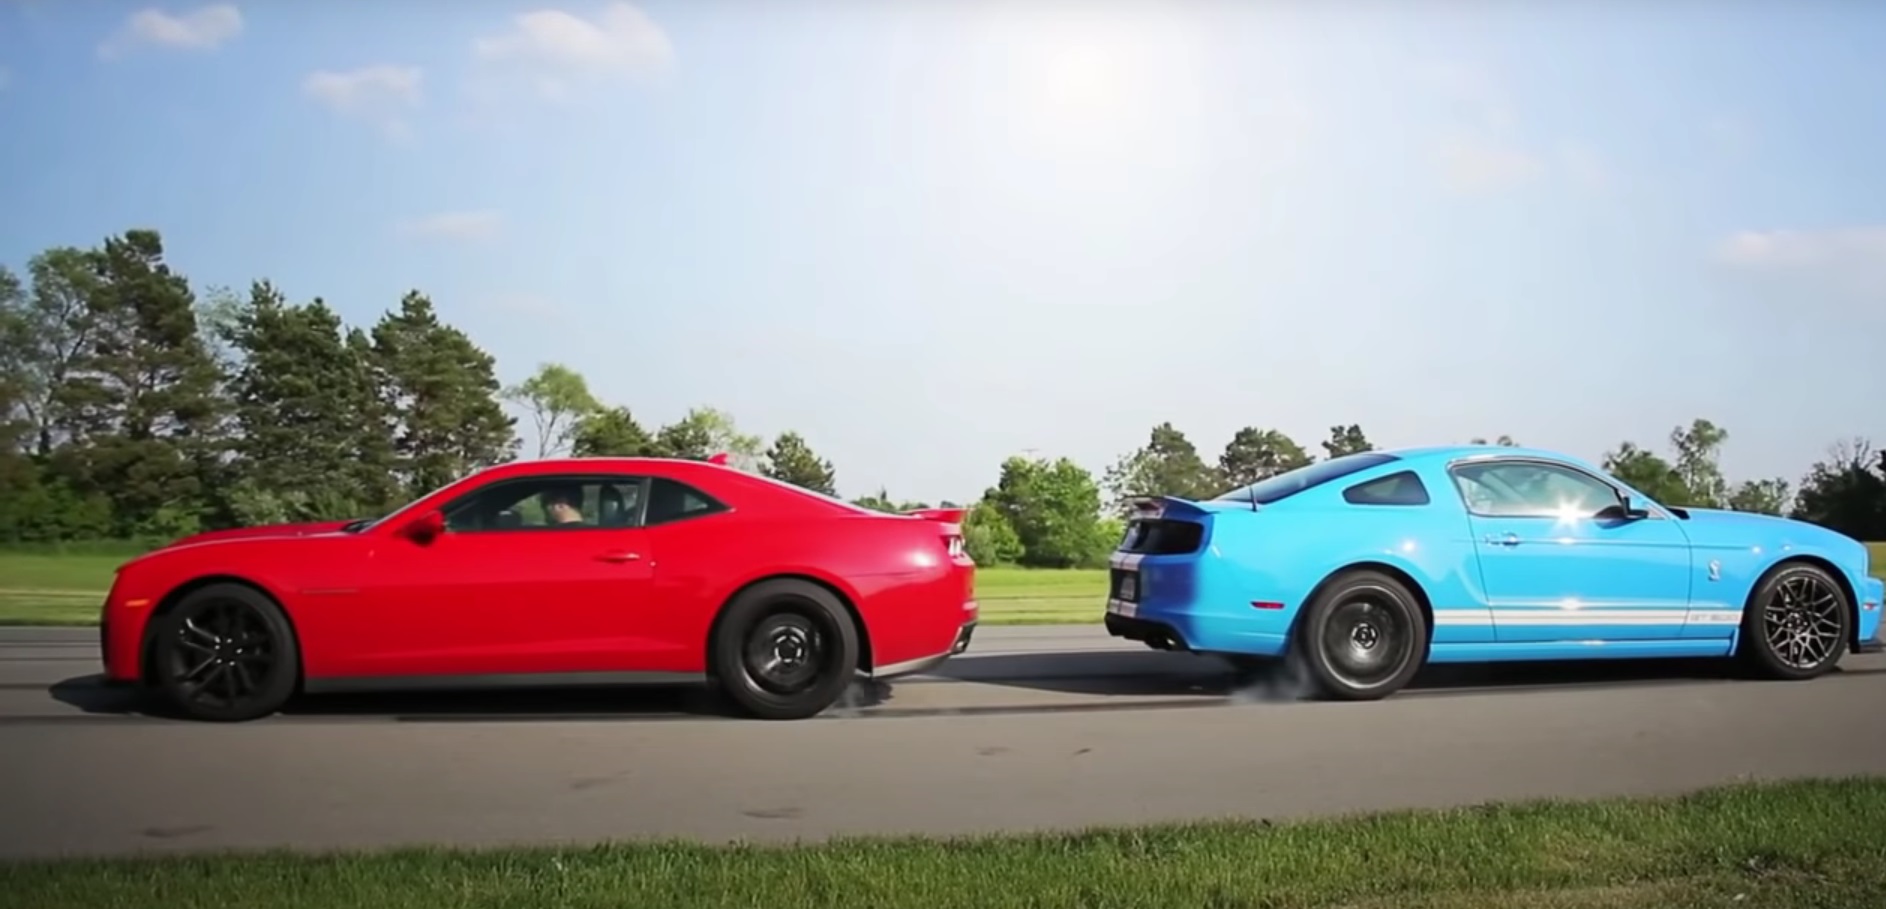 Video: 2013 Ford Mustang Shelby GT500 vs 2012 Chevrolet Camaro ZL1 Showdown